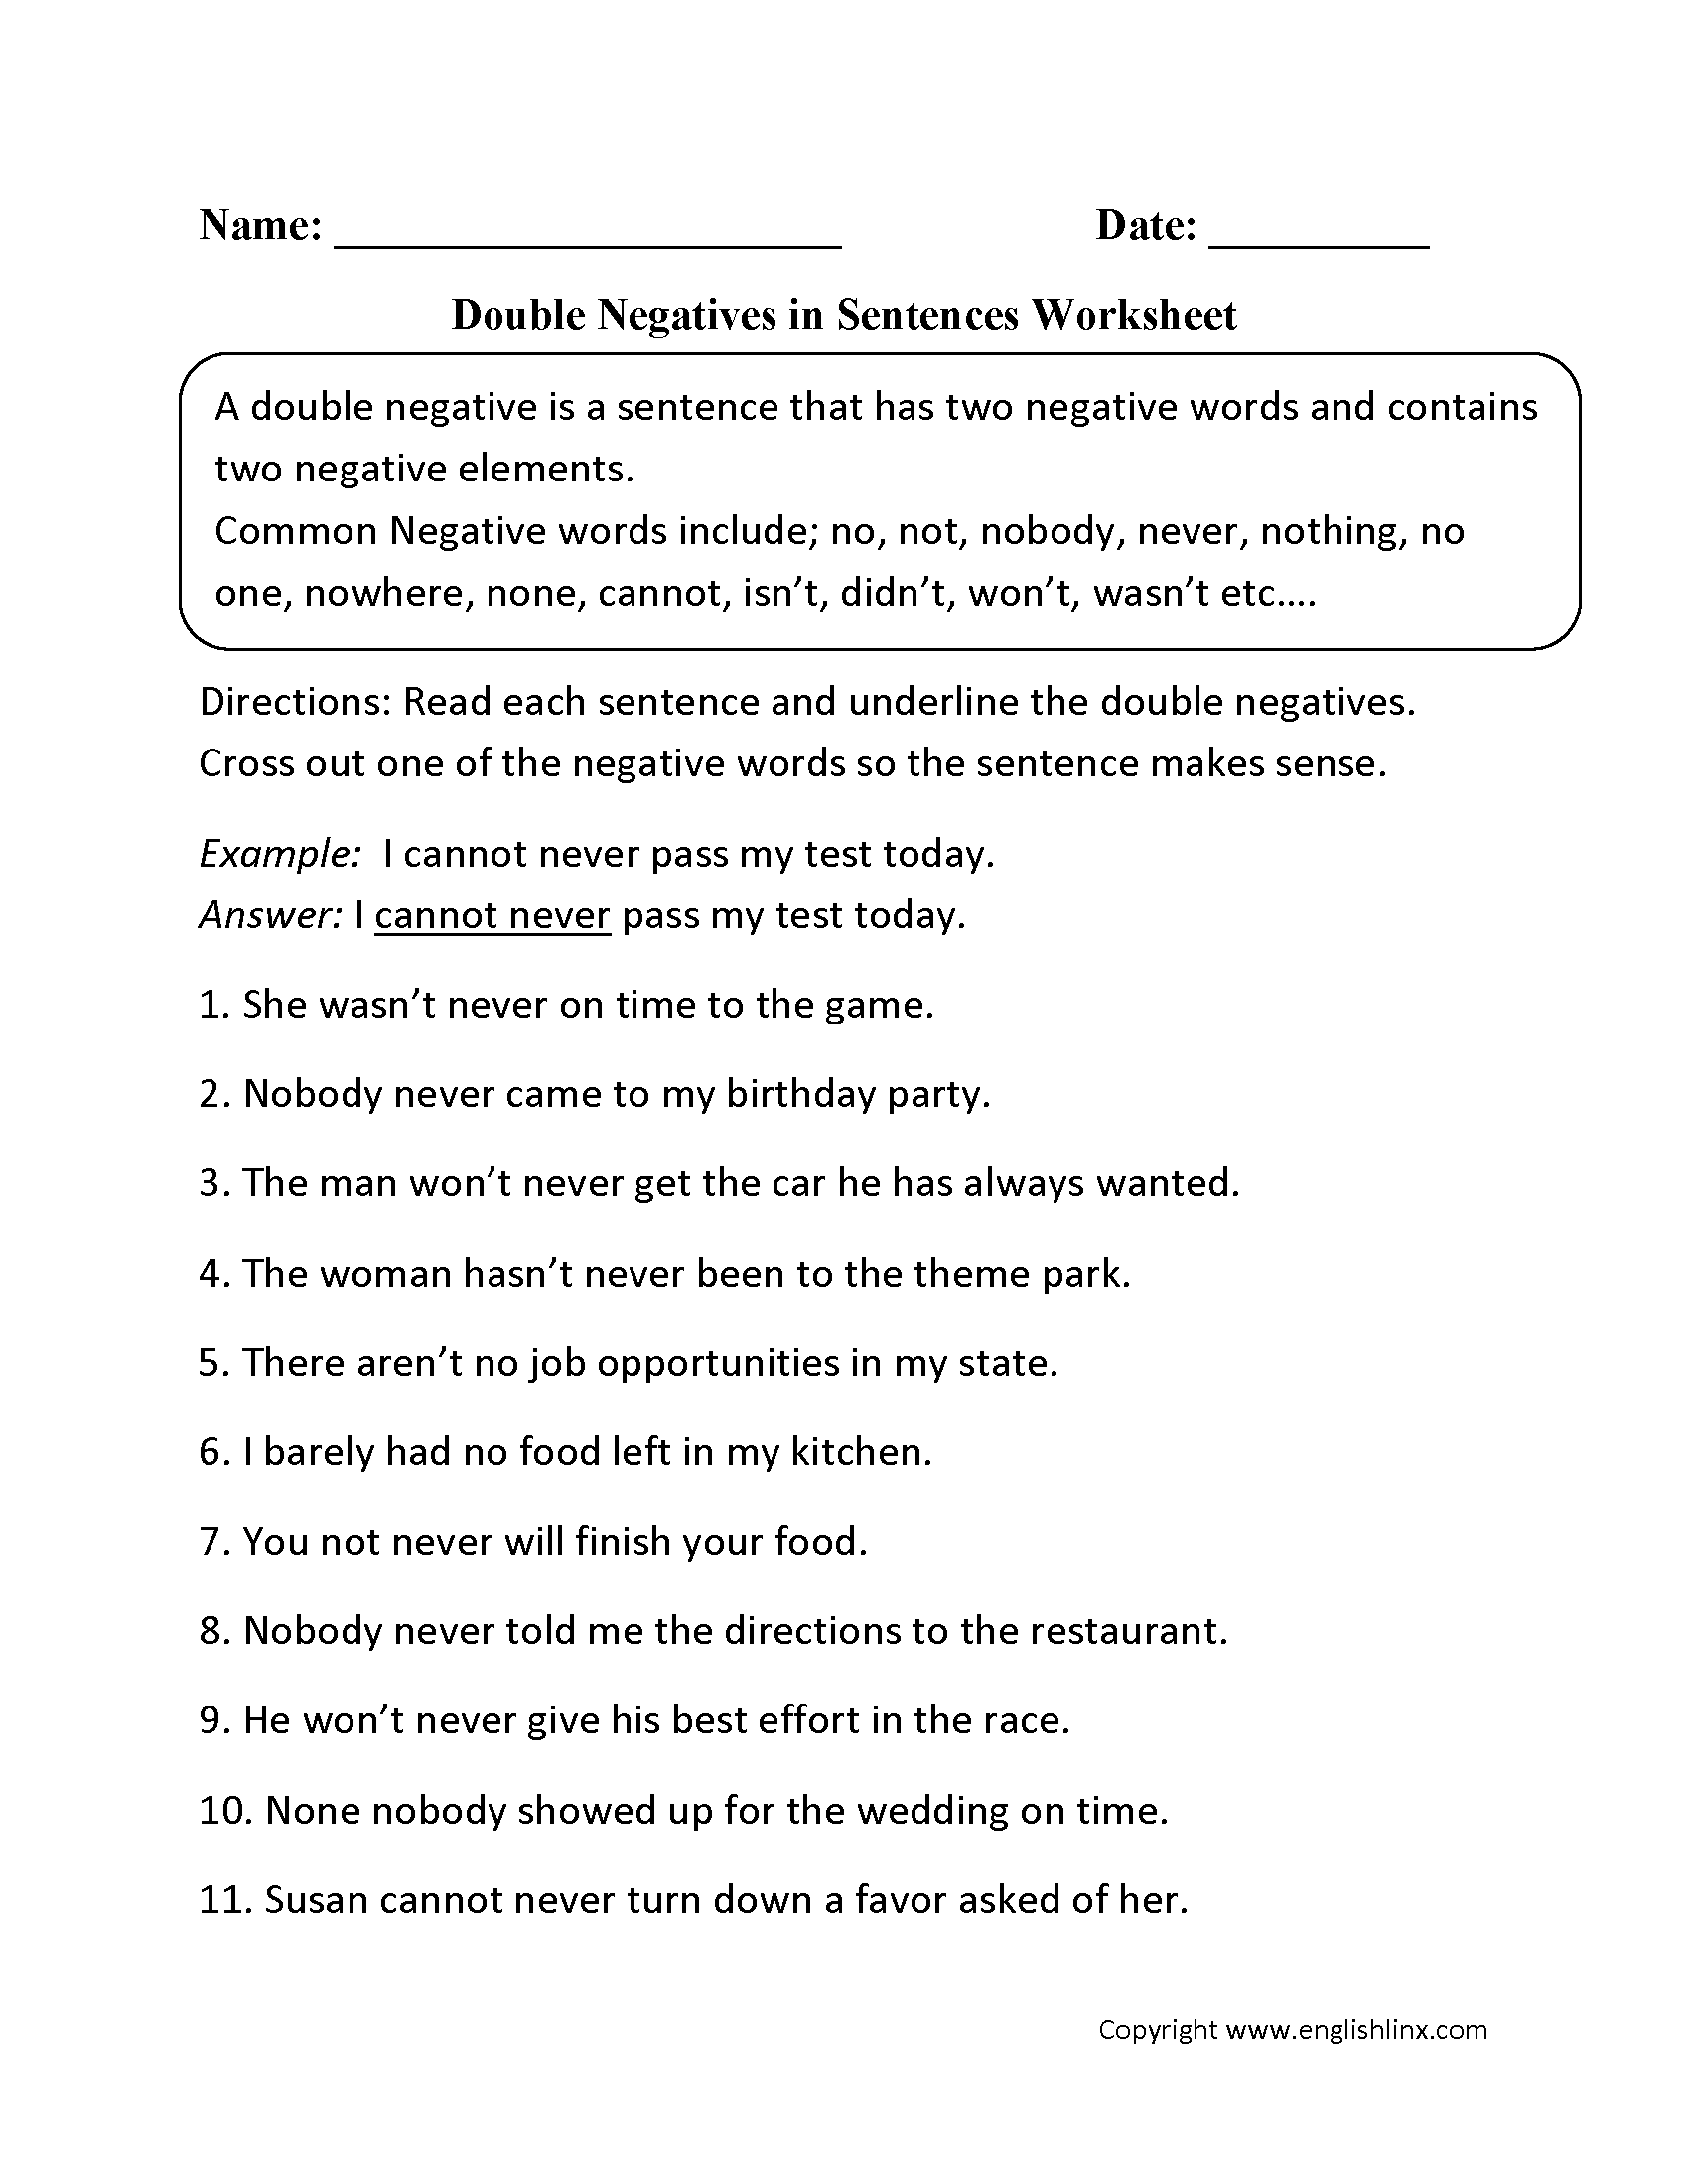 Double Negatives in Sentences Worksheet